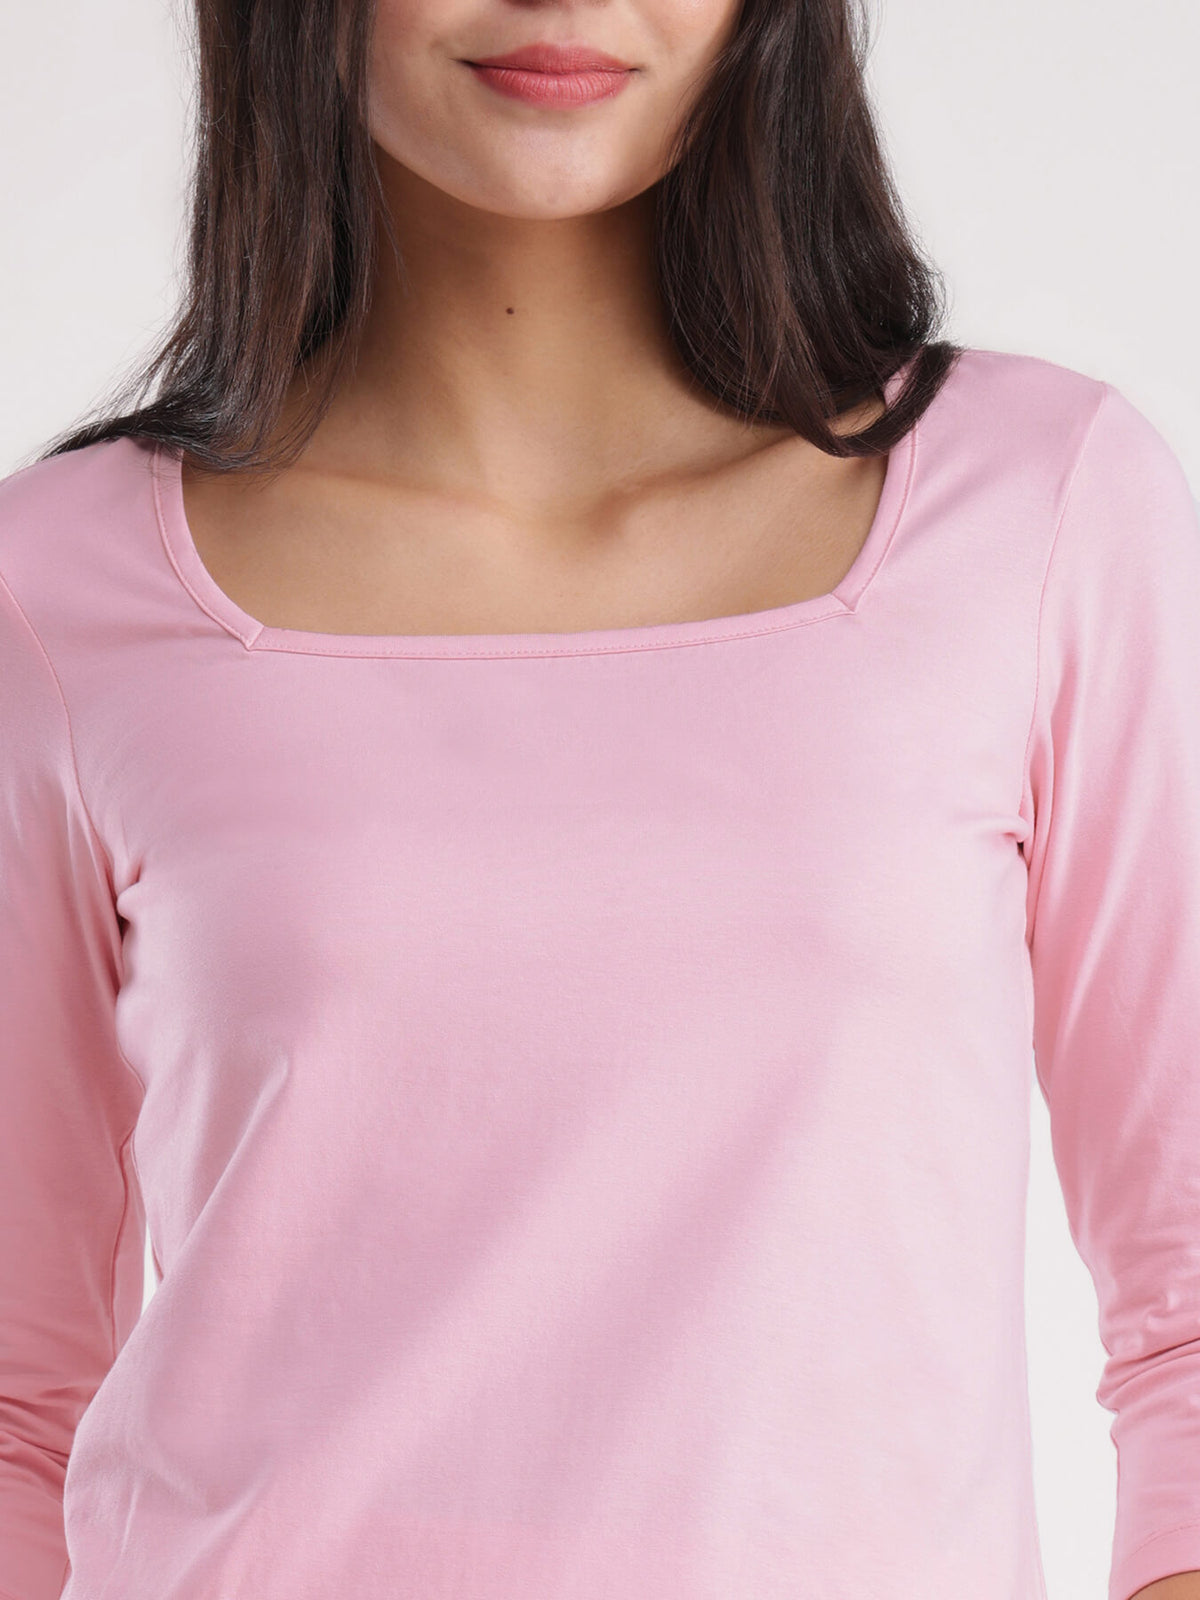 LivSoft Cotton Square Neck T-Shirt - Pink